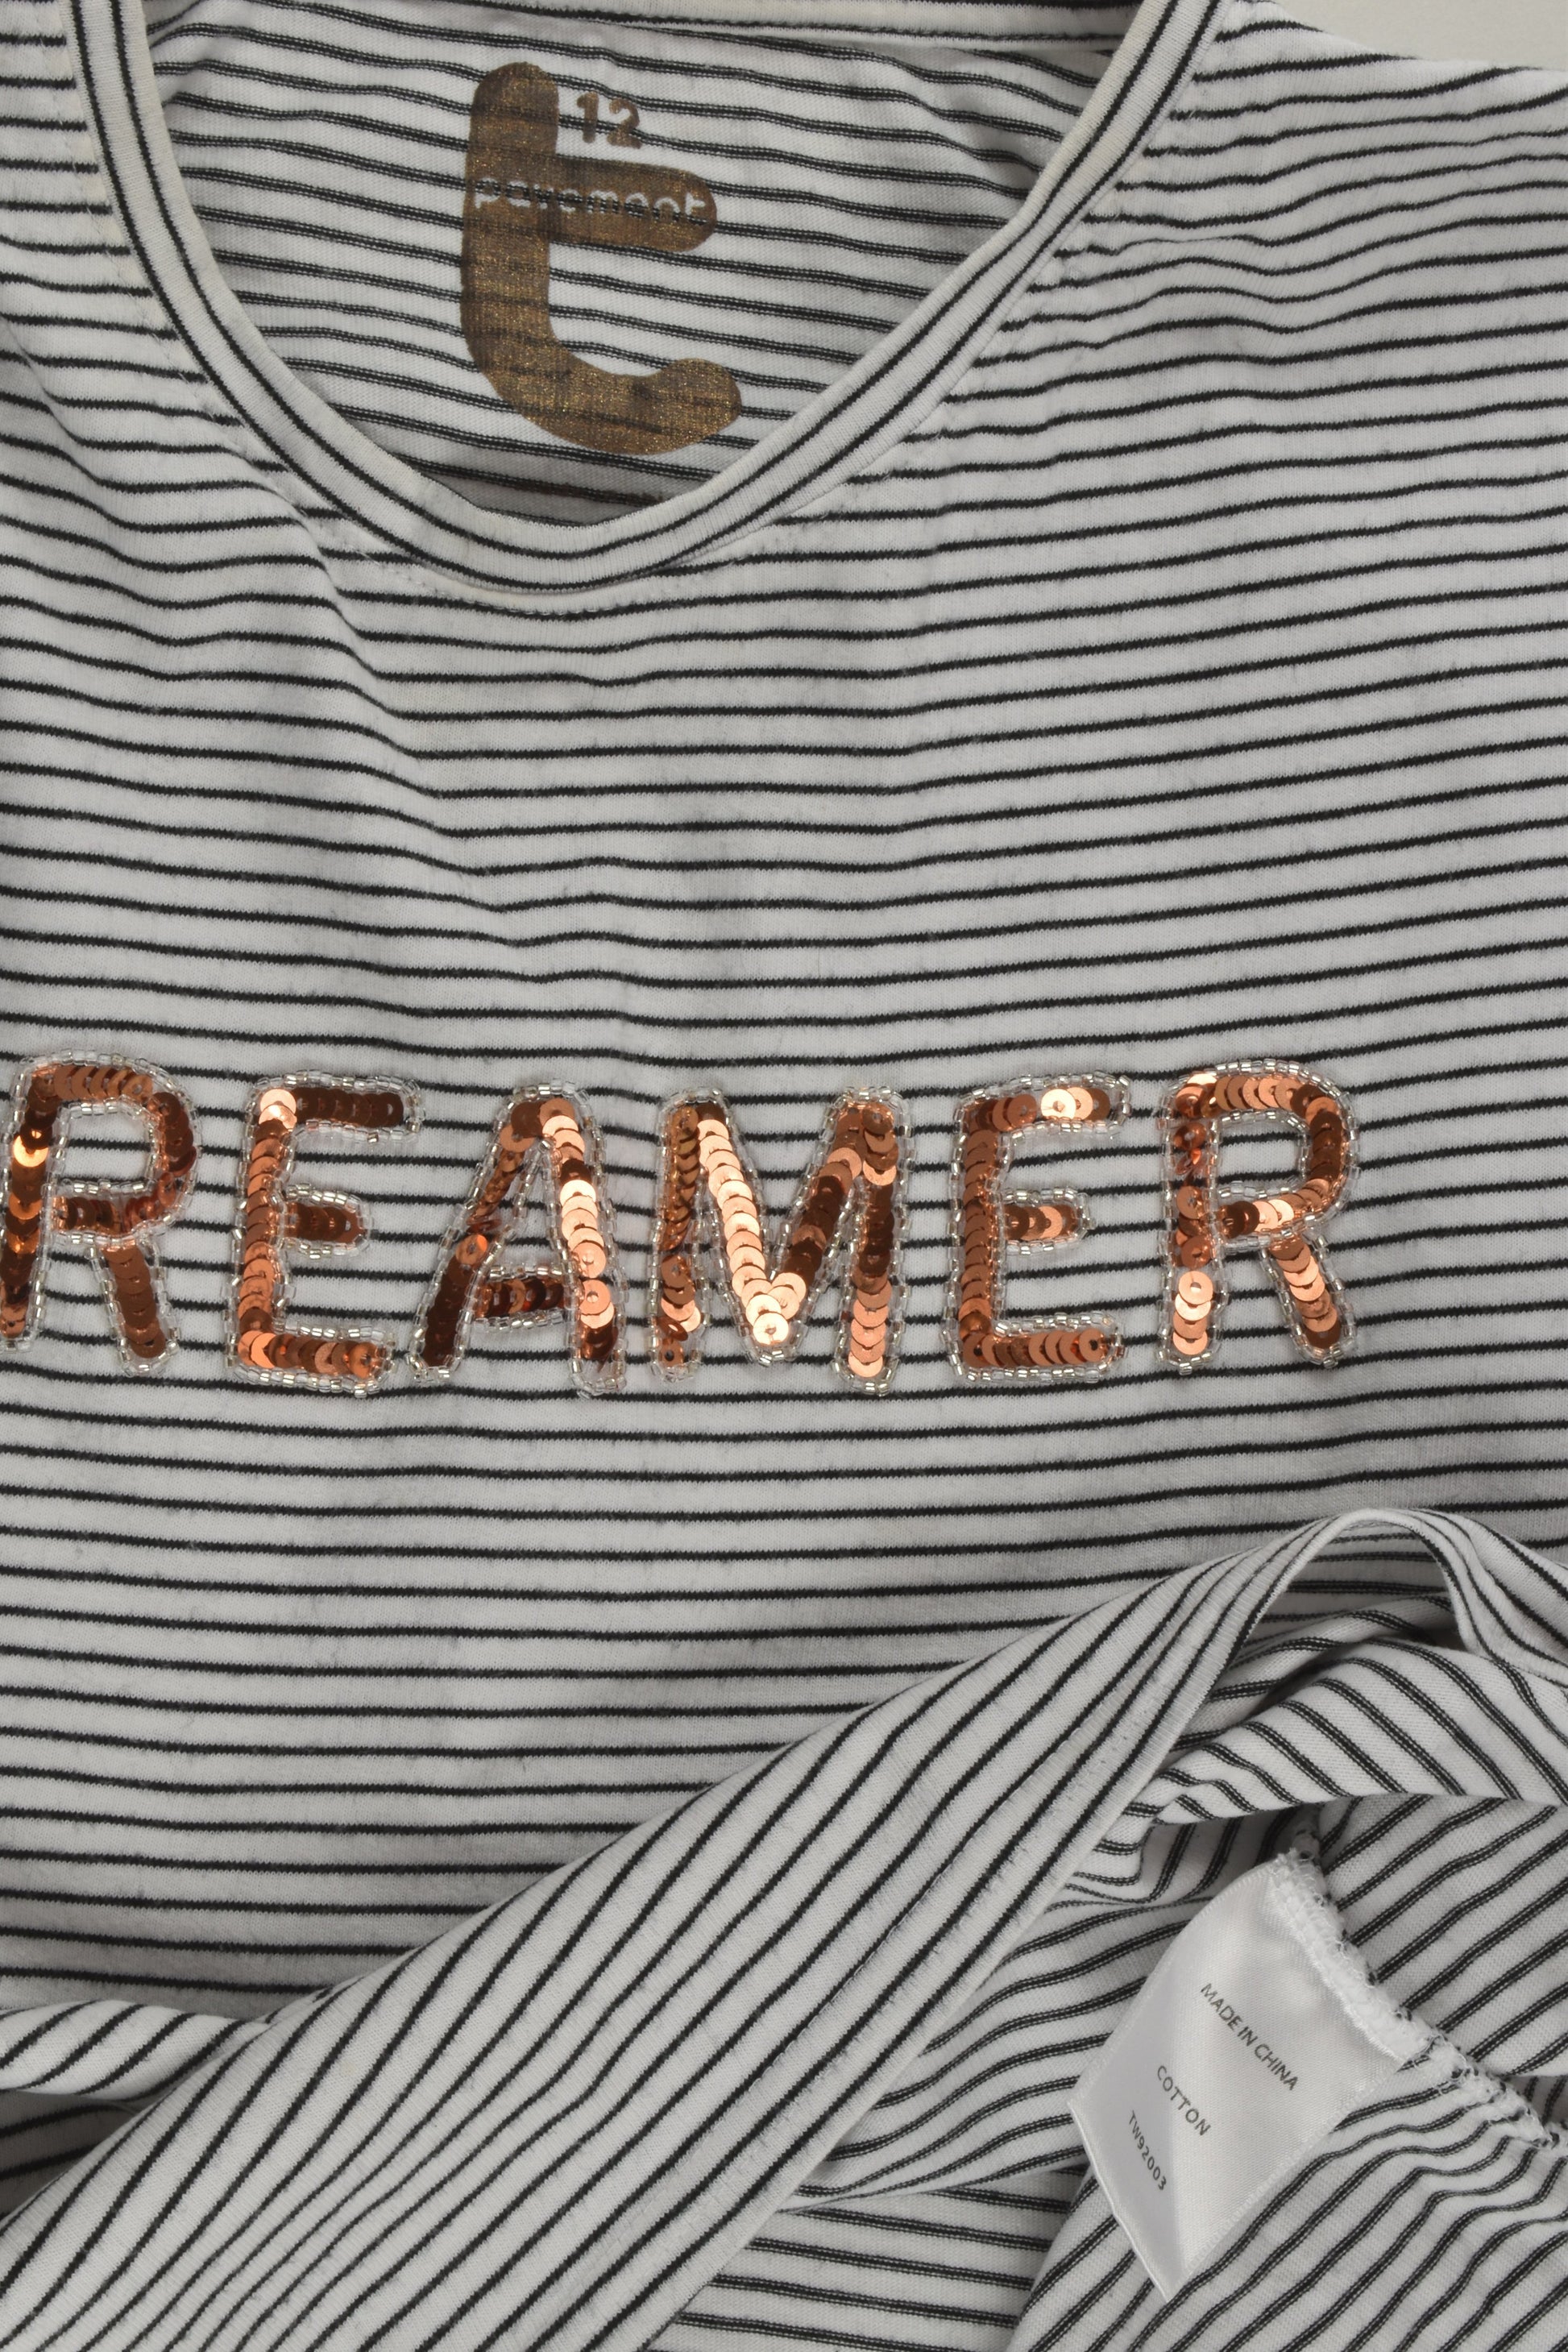 Pavement Size 10 'Dreamer' T-shirt